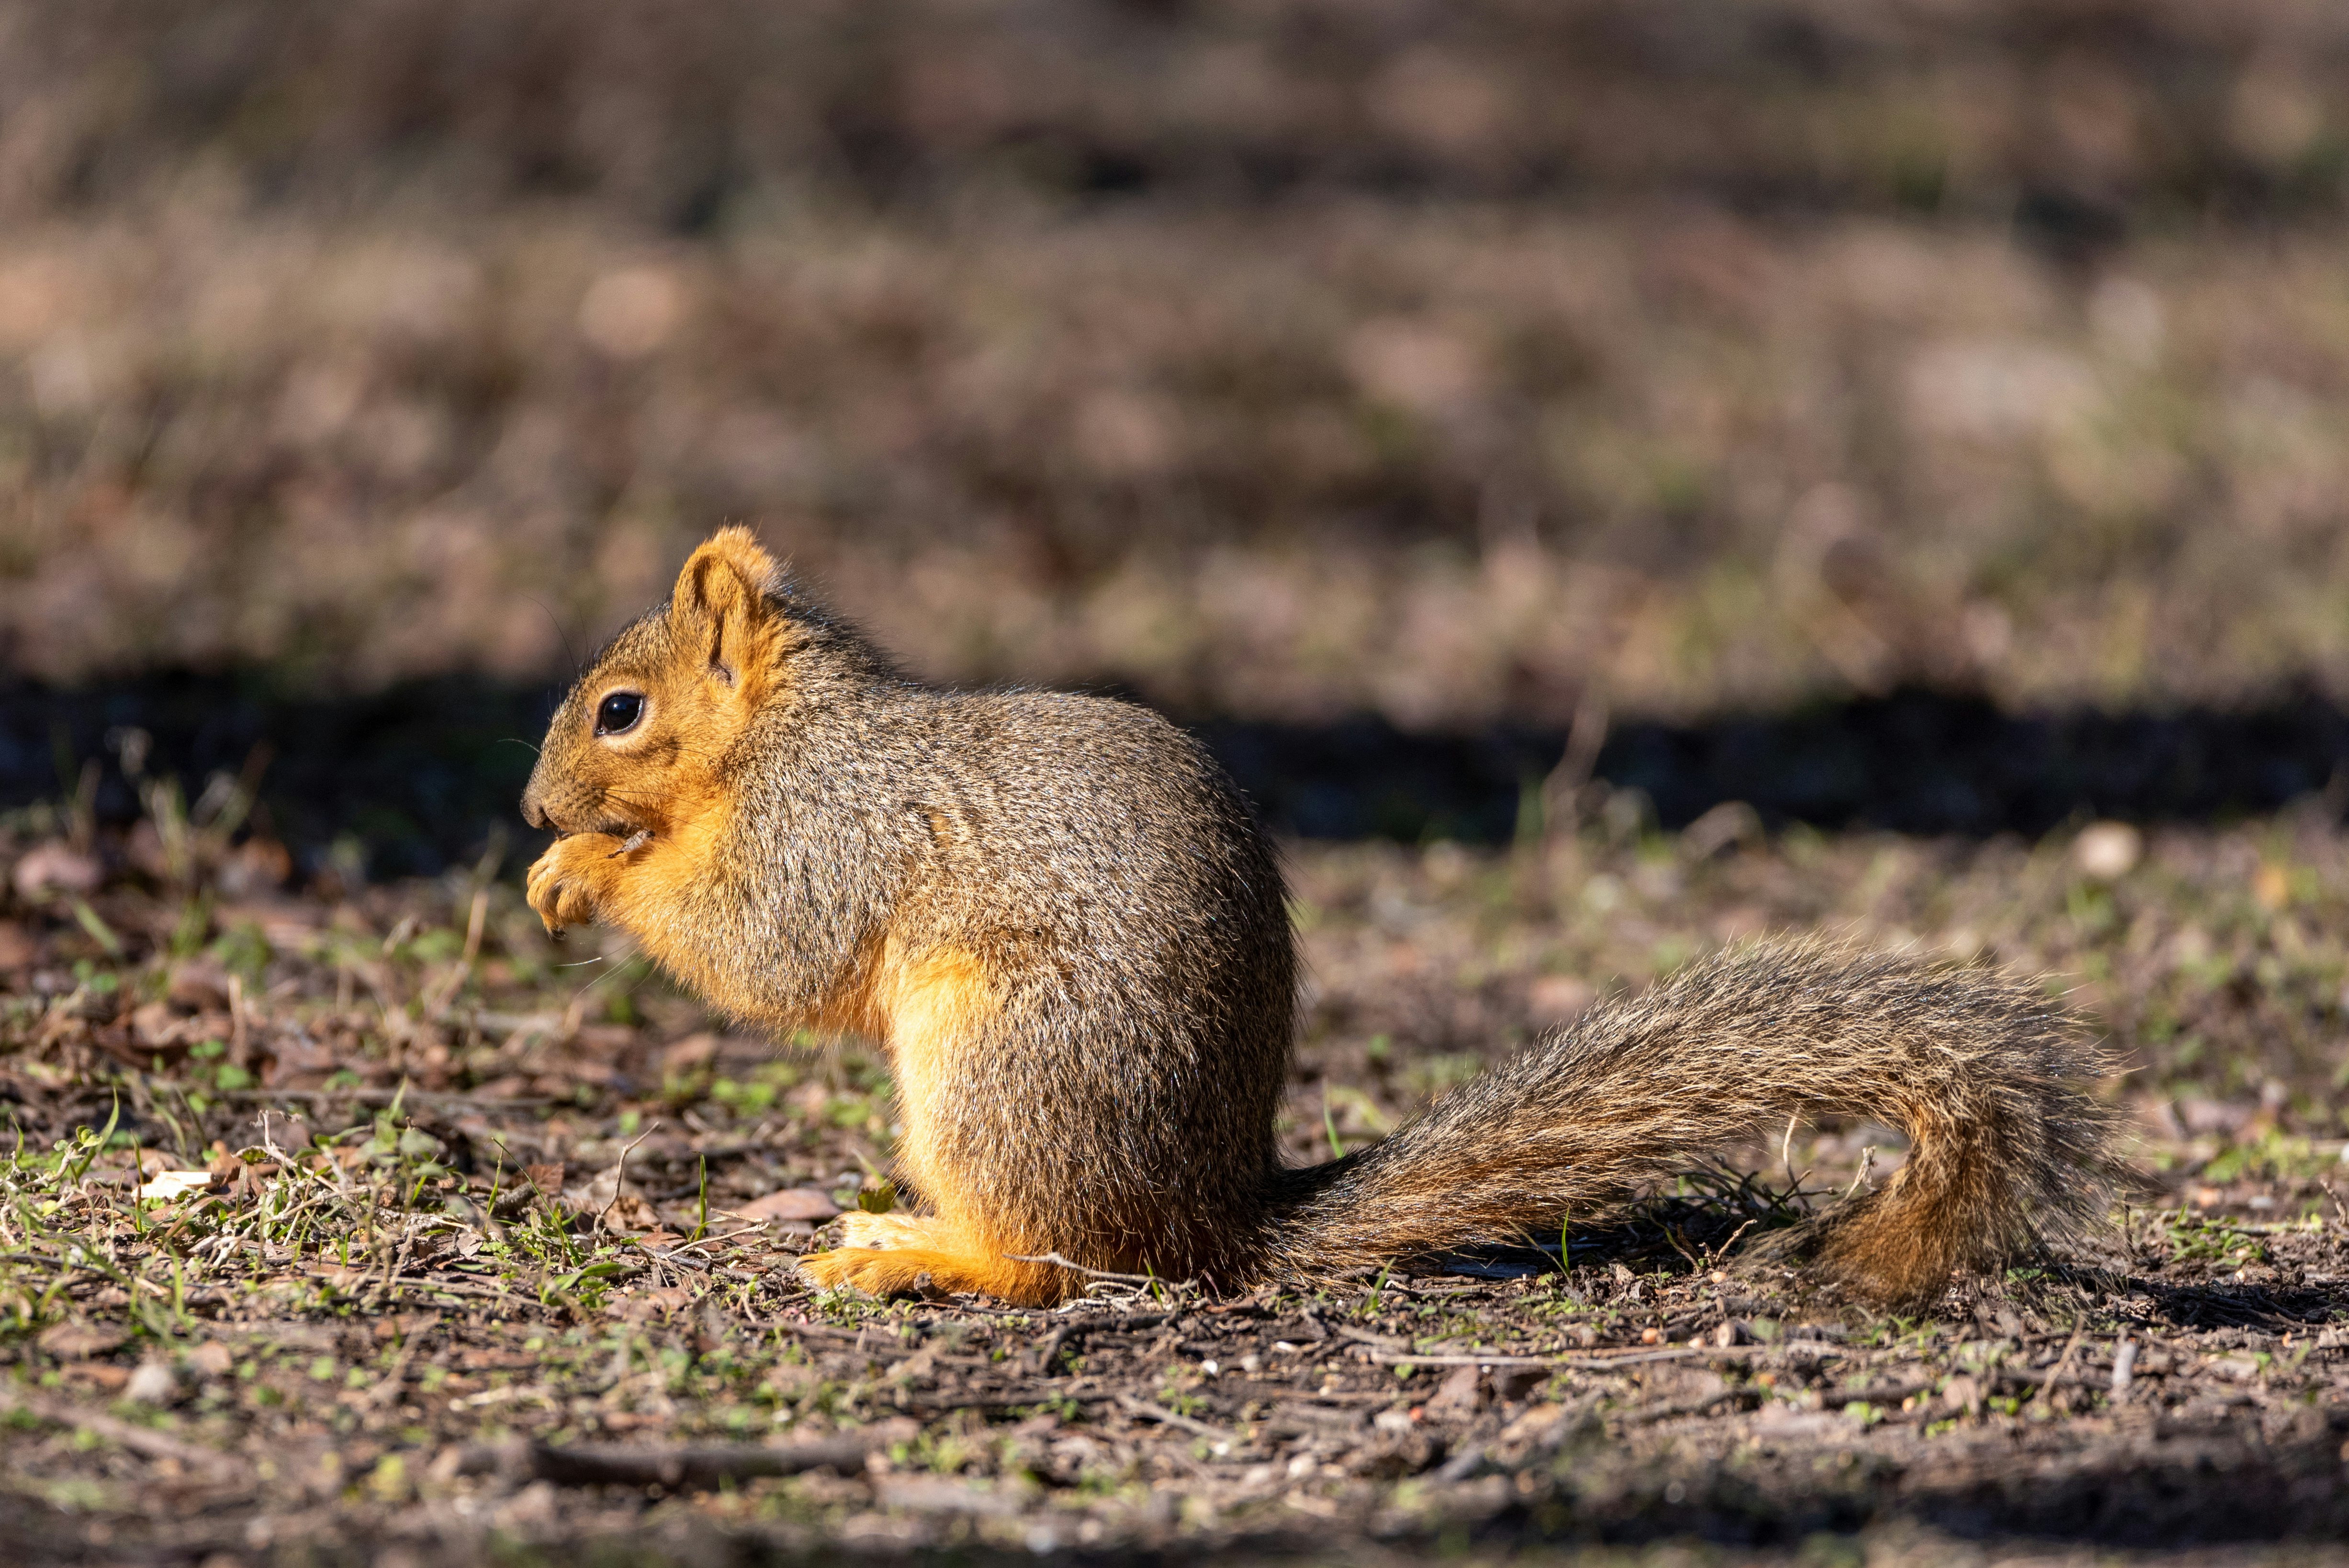 brown squirrel on brown grass during daytime